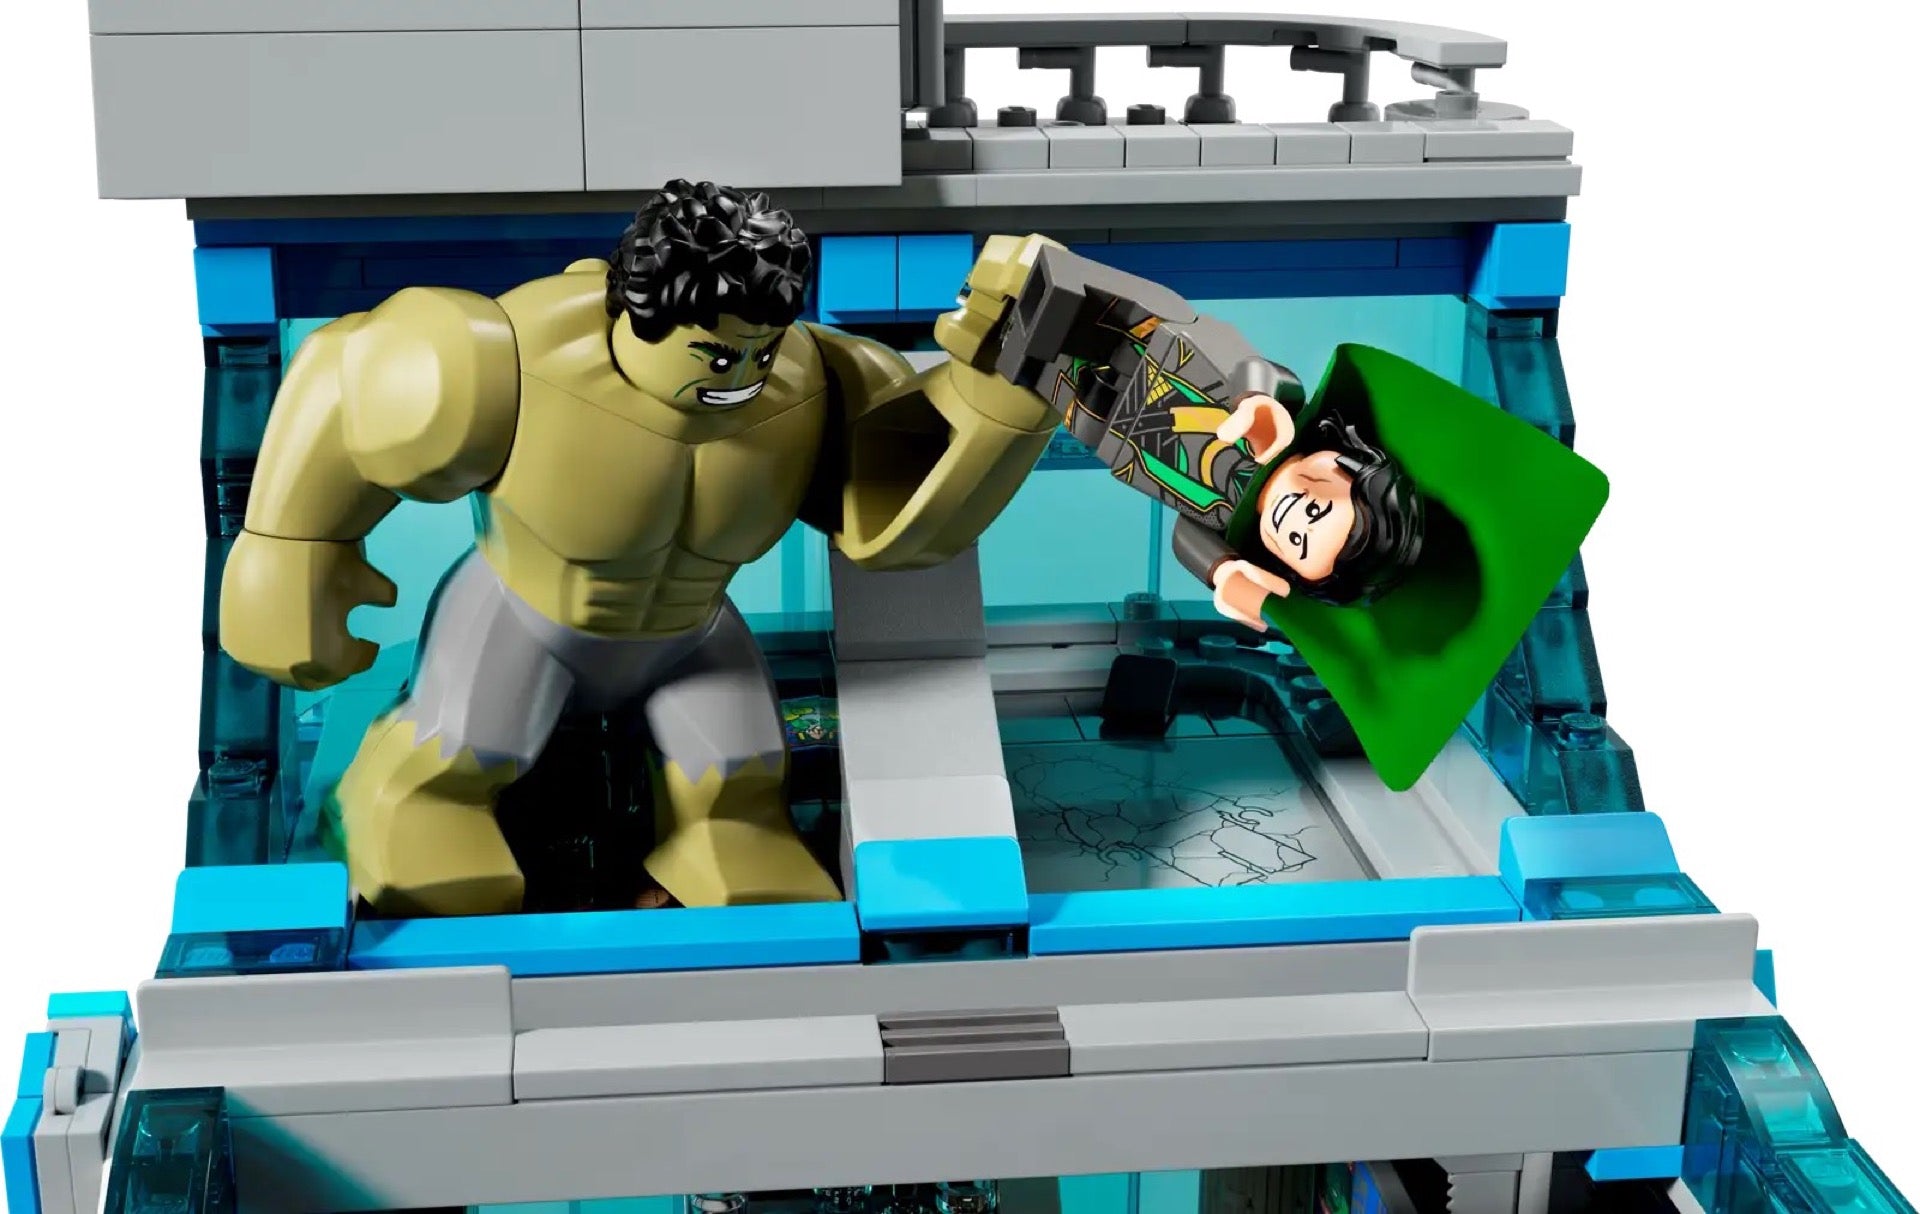 76269  Lego Marvel Super Heroes  Torre degli Avengers